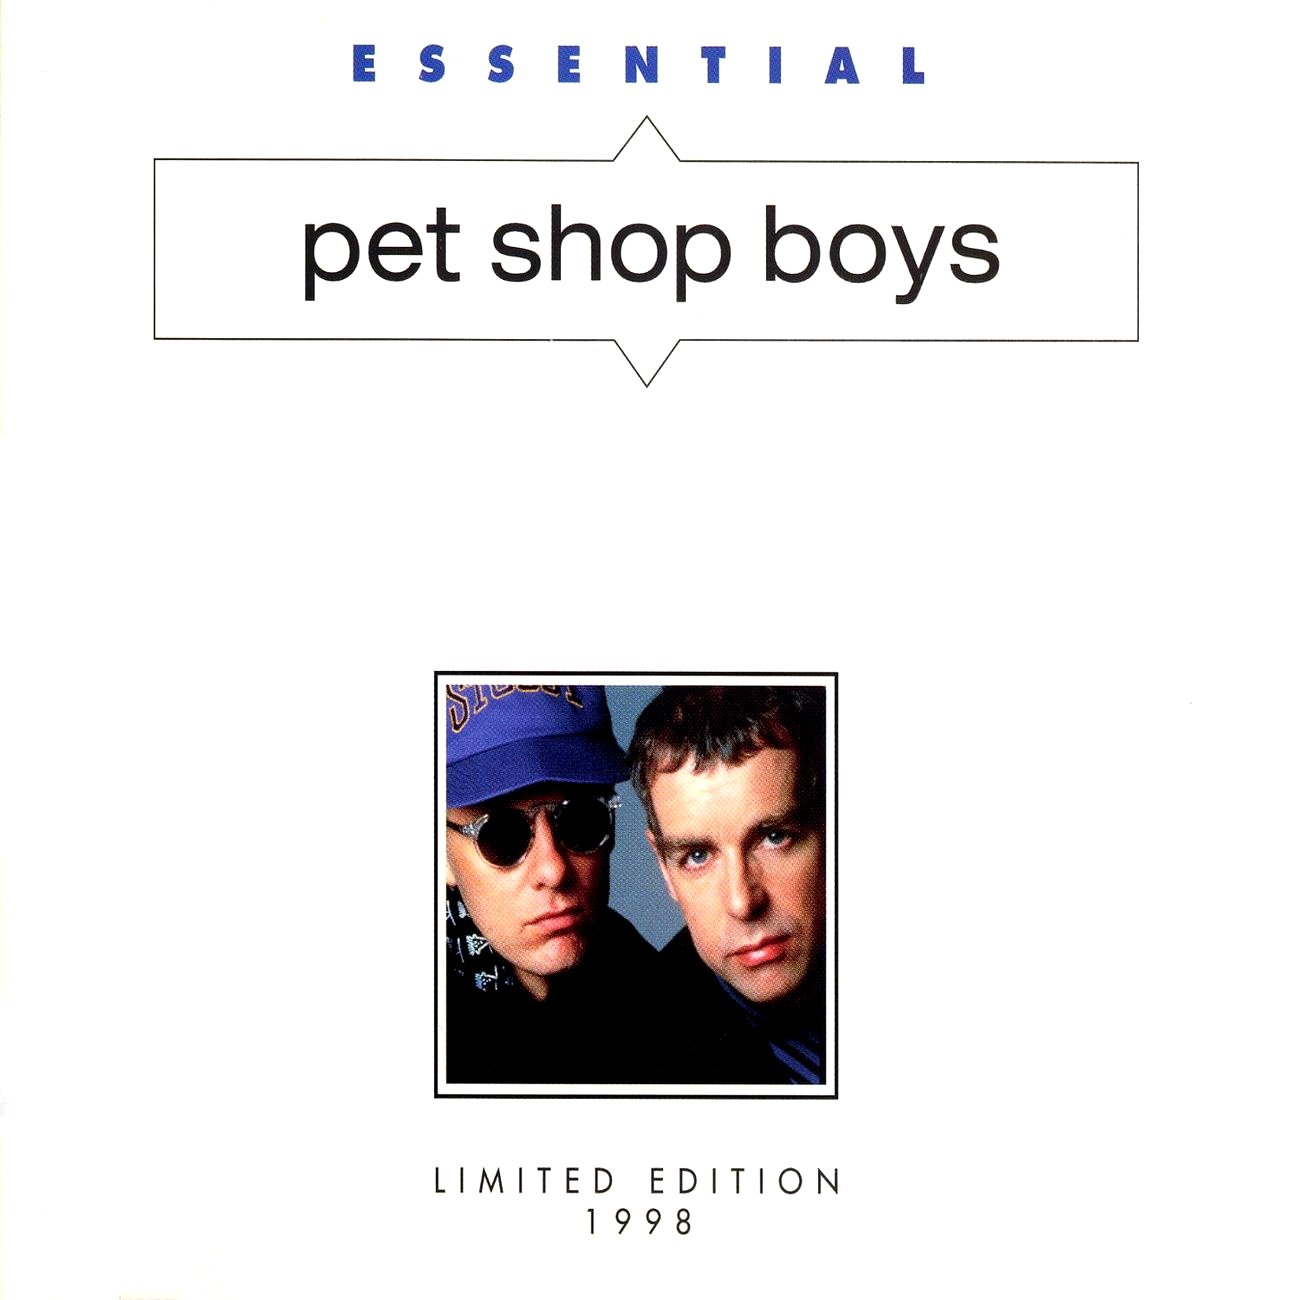 Pet shop boys dancing star. Pet shop boys 1998. Pet shop boys Essential. Pet shop boys обложки альбомов. Pet shop boys обложка.